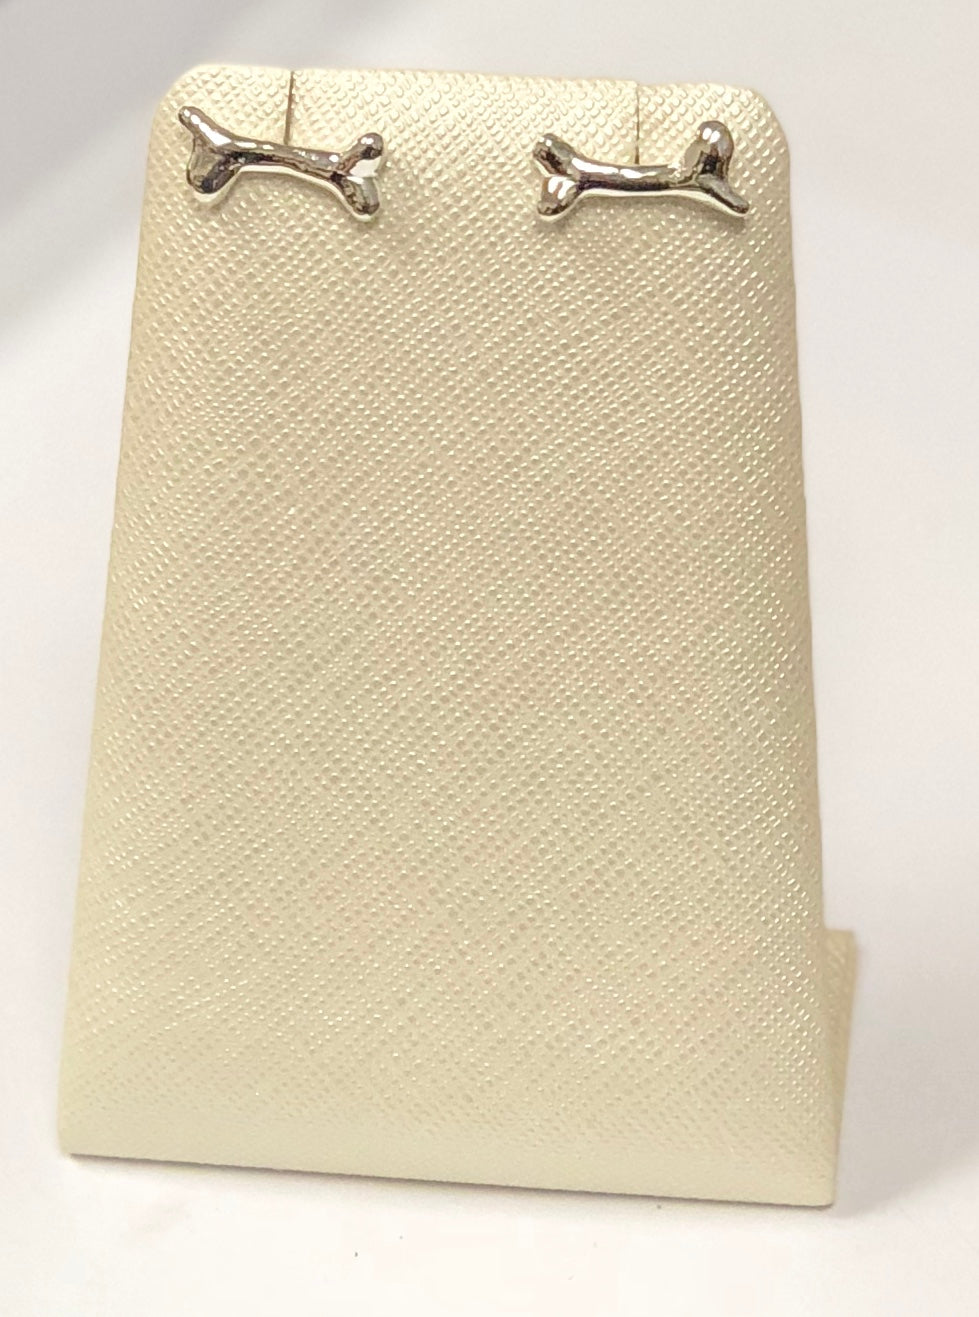 Large Bone Post Earrings made of .925 Sterling Silver